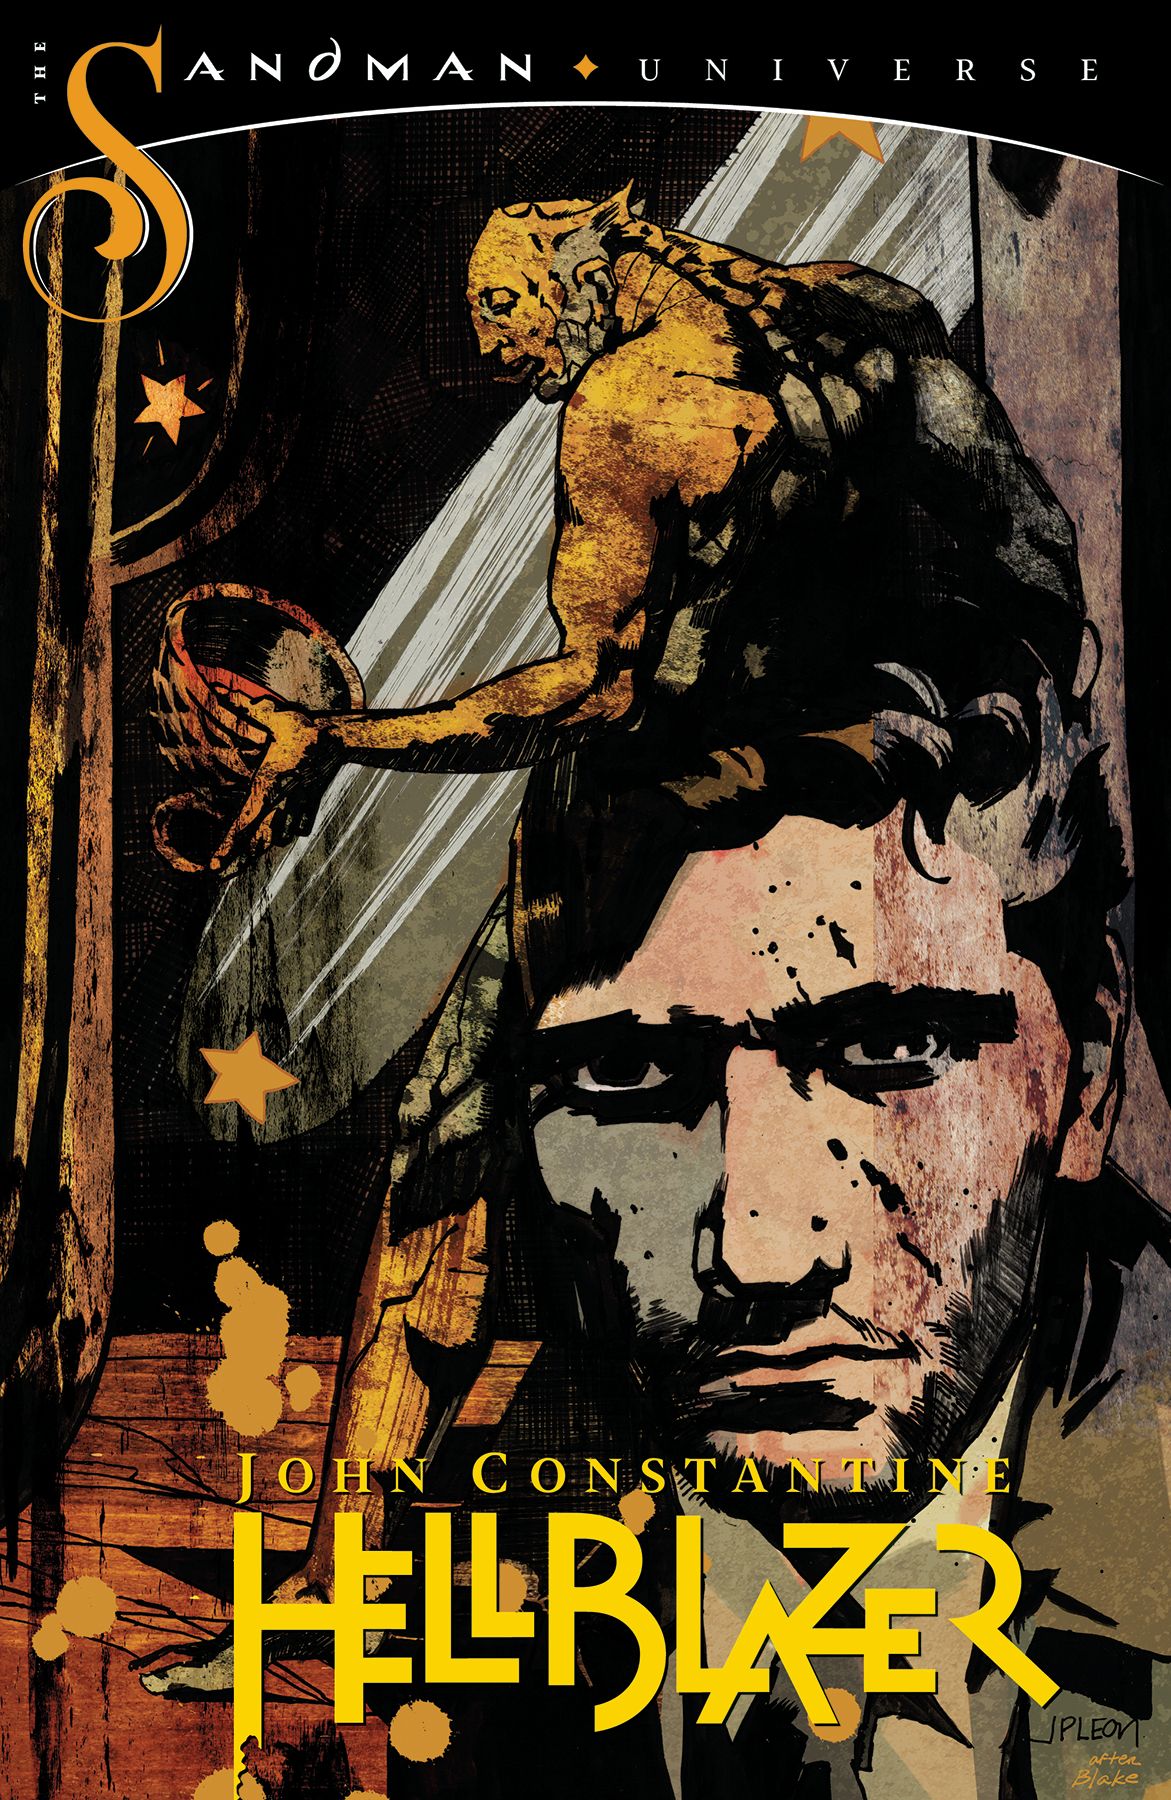 John Constantine: Hellblazer #2 Comic